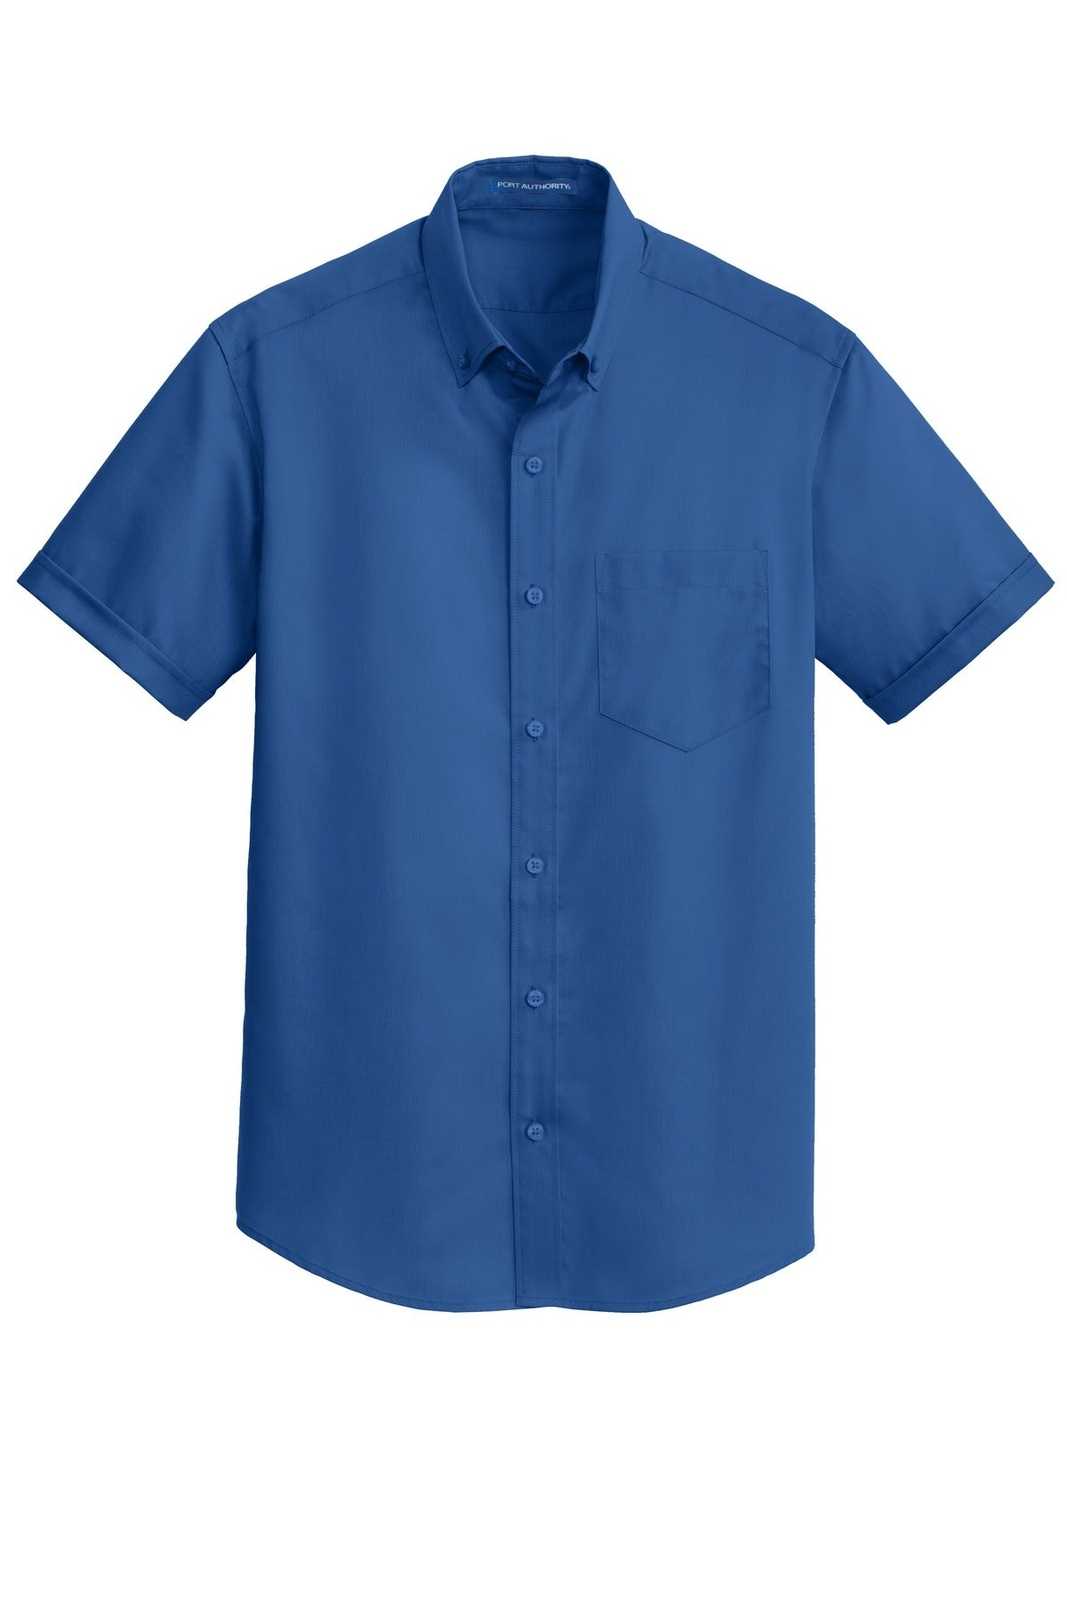 Port Authority S664 Short Sleeve Superpro Twill Shirt - True Blue - HIT a Double - 5